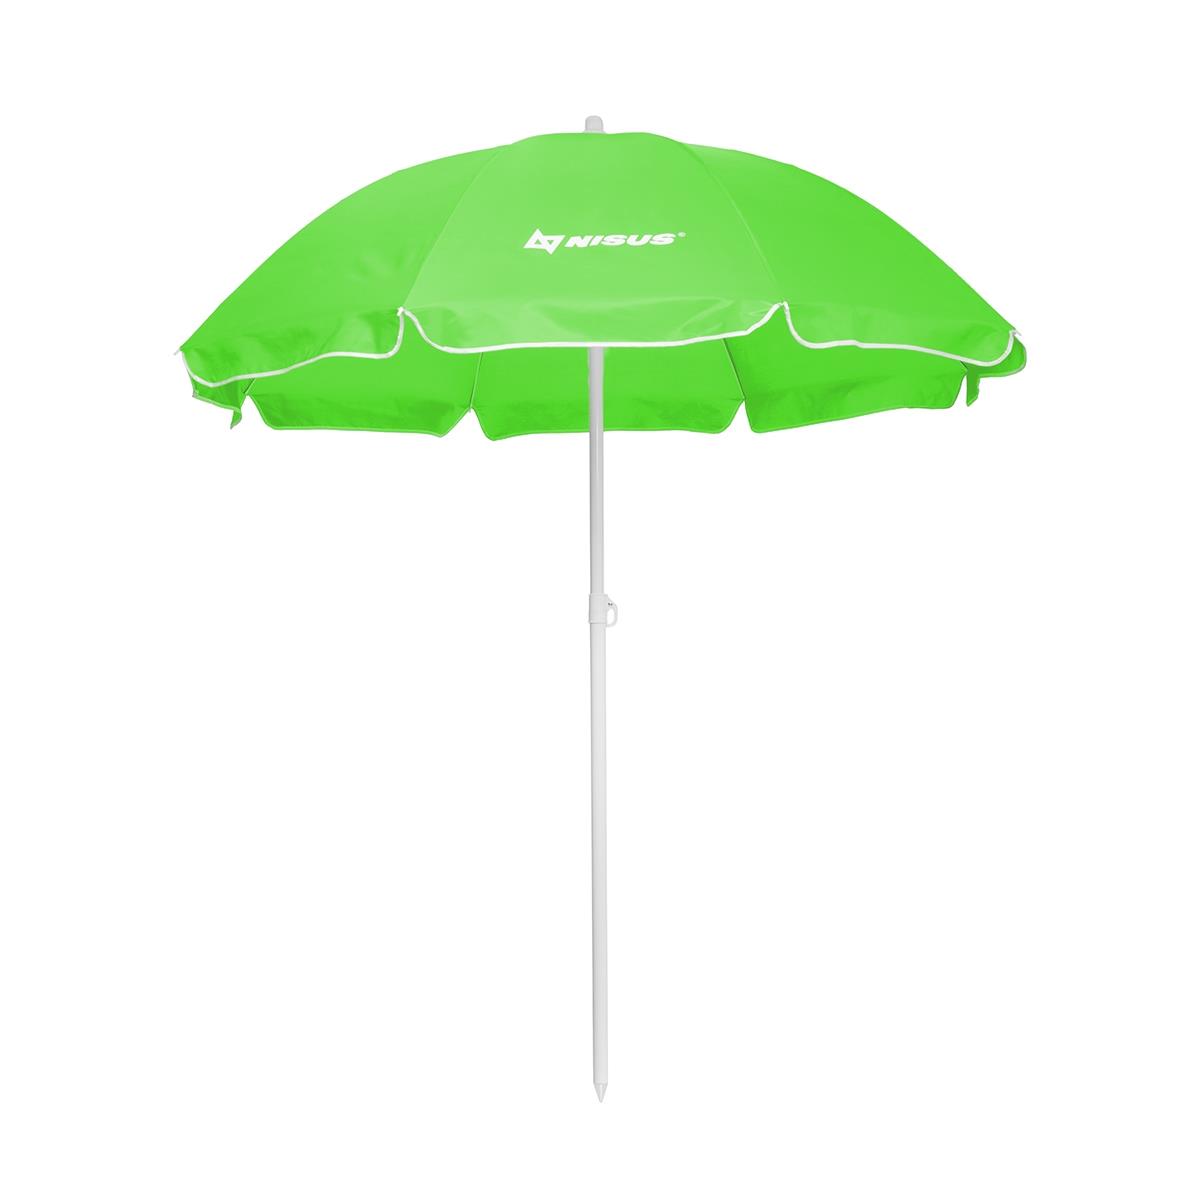 Зонт пляжный d 2,00м прямой зеленый (28/32/210D) NA-200-G Nisus зонт пляжный d 2 00м с наклоном 28 32 210d na 200n g nisus